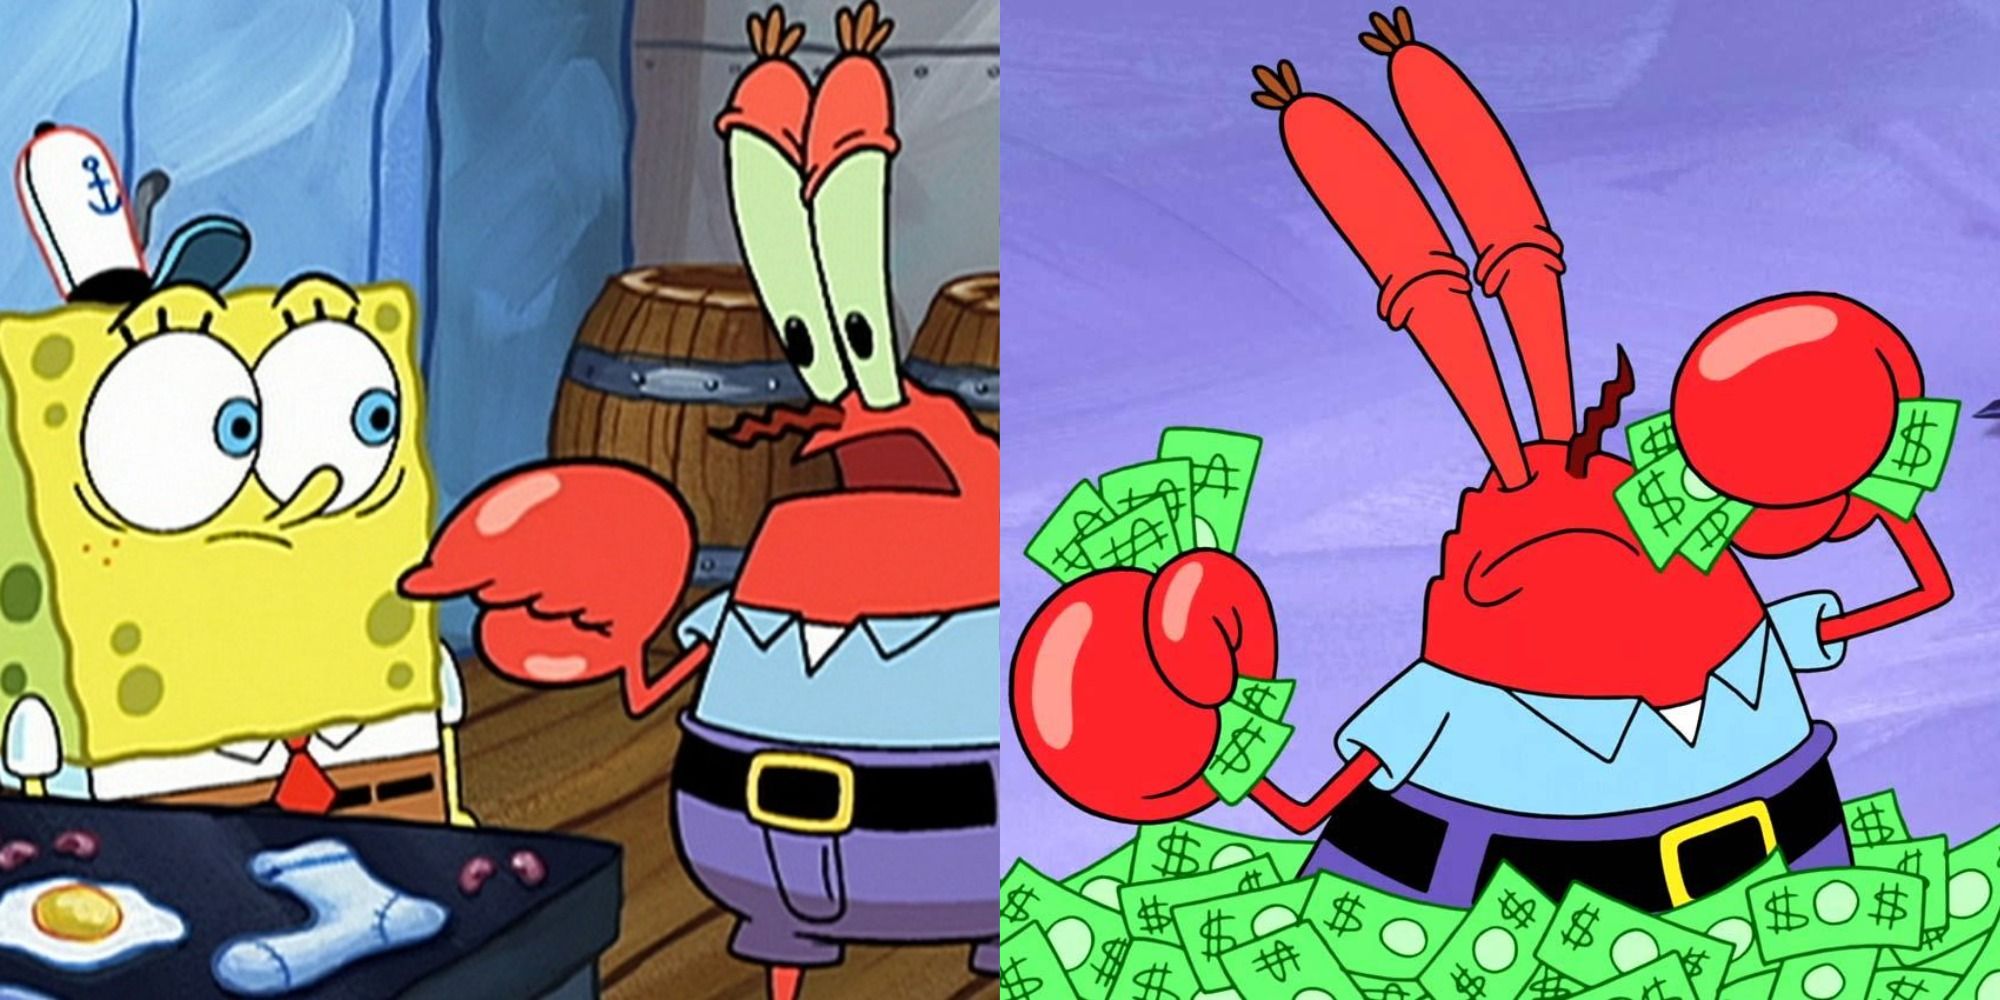 Mr Krabs talking to Spongebob and Mr Krabs in a pile of money